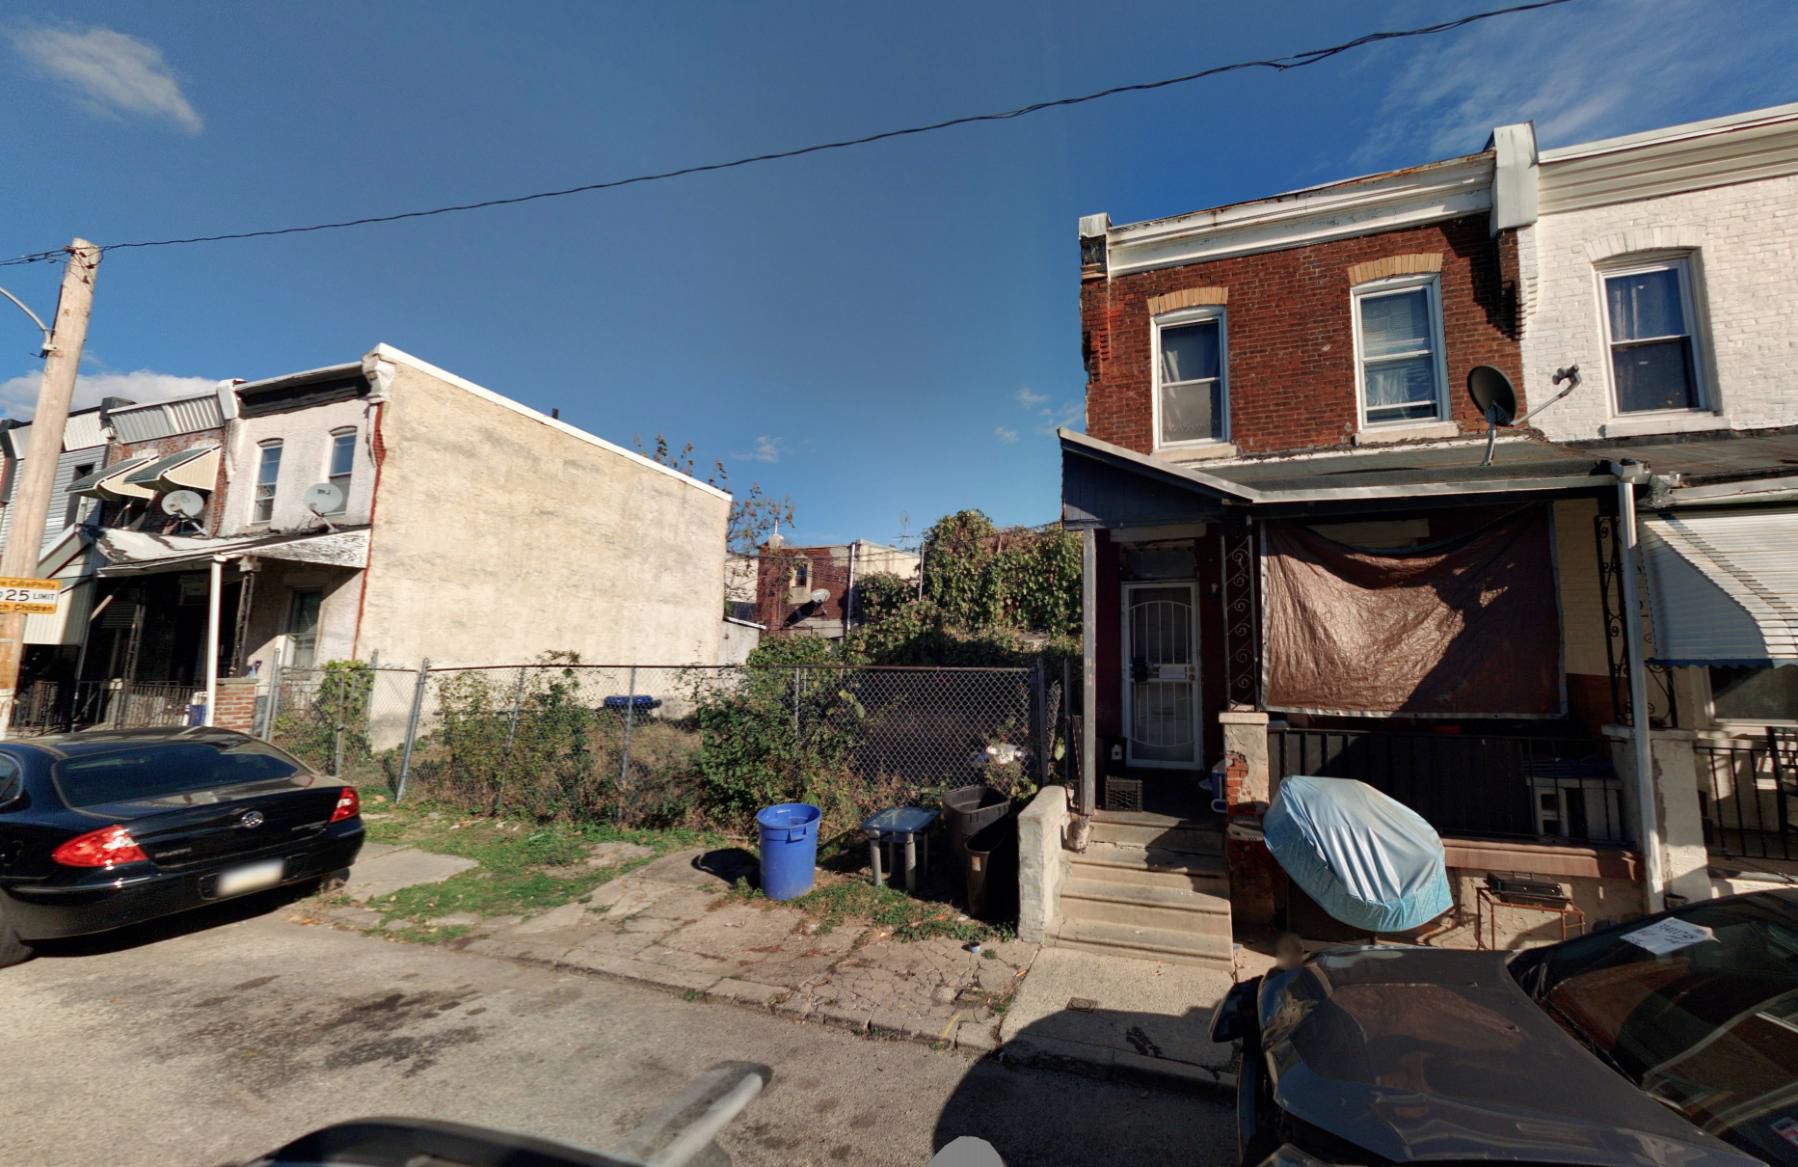 653 North Sickels Street. Site conditions prior to redevelopment. Looking northeast. Credit: Moto Designshop via the City of Philadelphia